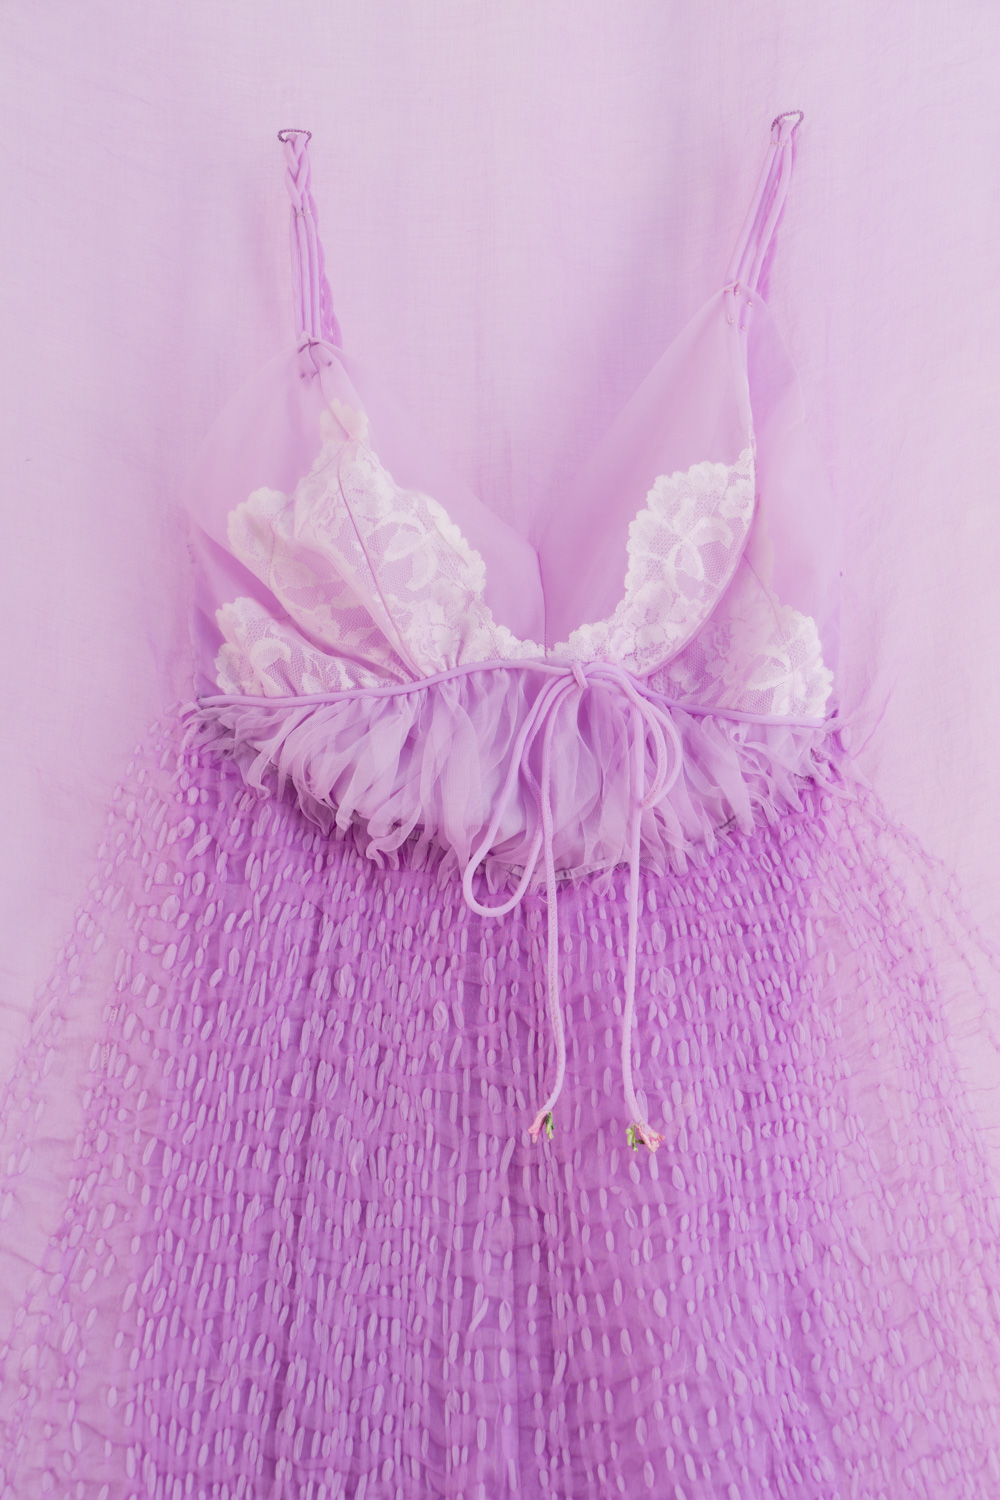   Dissolved nightie in lilac  (detail), 2018. 